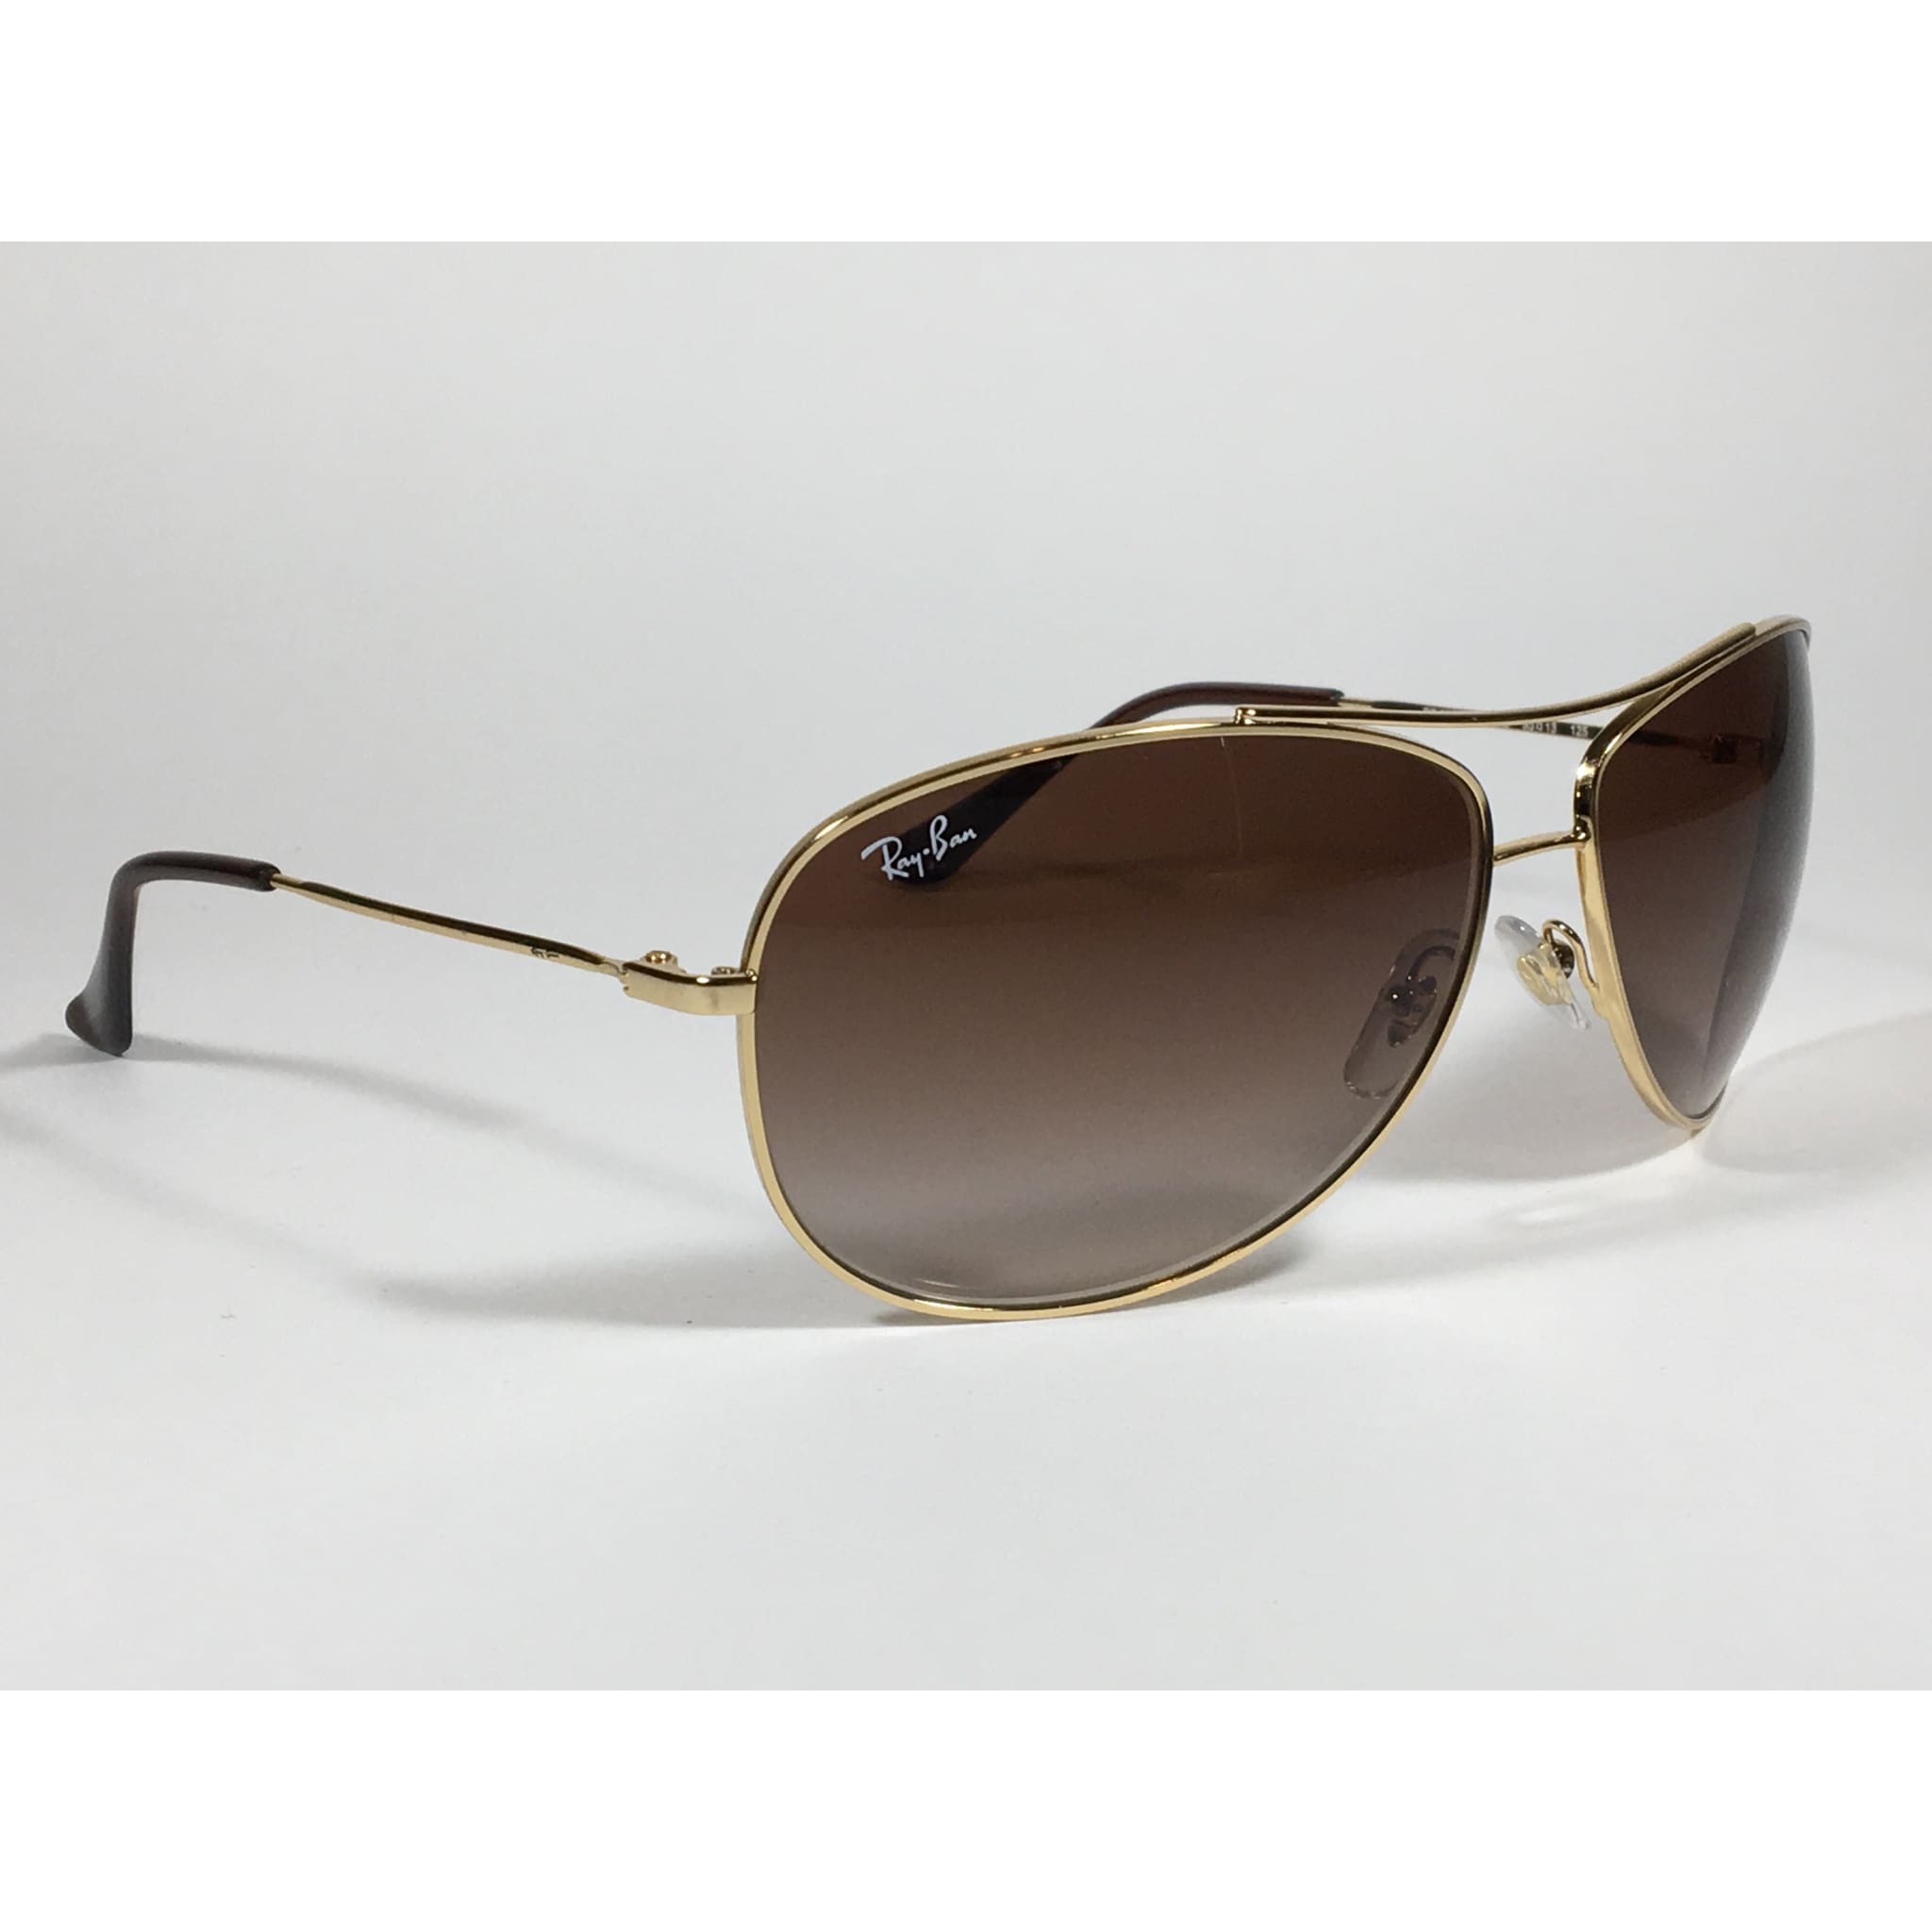 Ray-Ban Aviator Gradient Sunglasses (Brown Gradient Lens, Gunmetal Frame)  in Karnal at best price by Ainakvala - Justdial